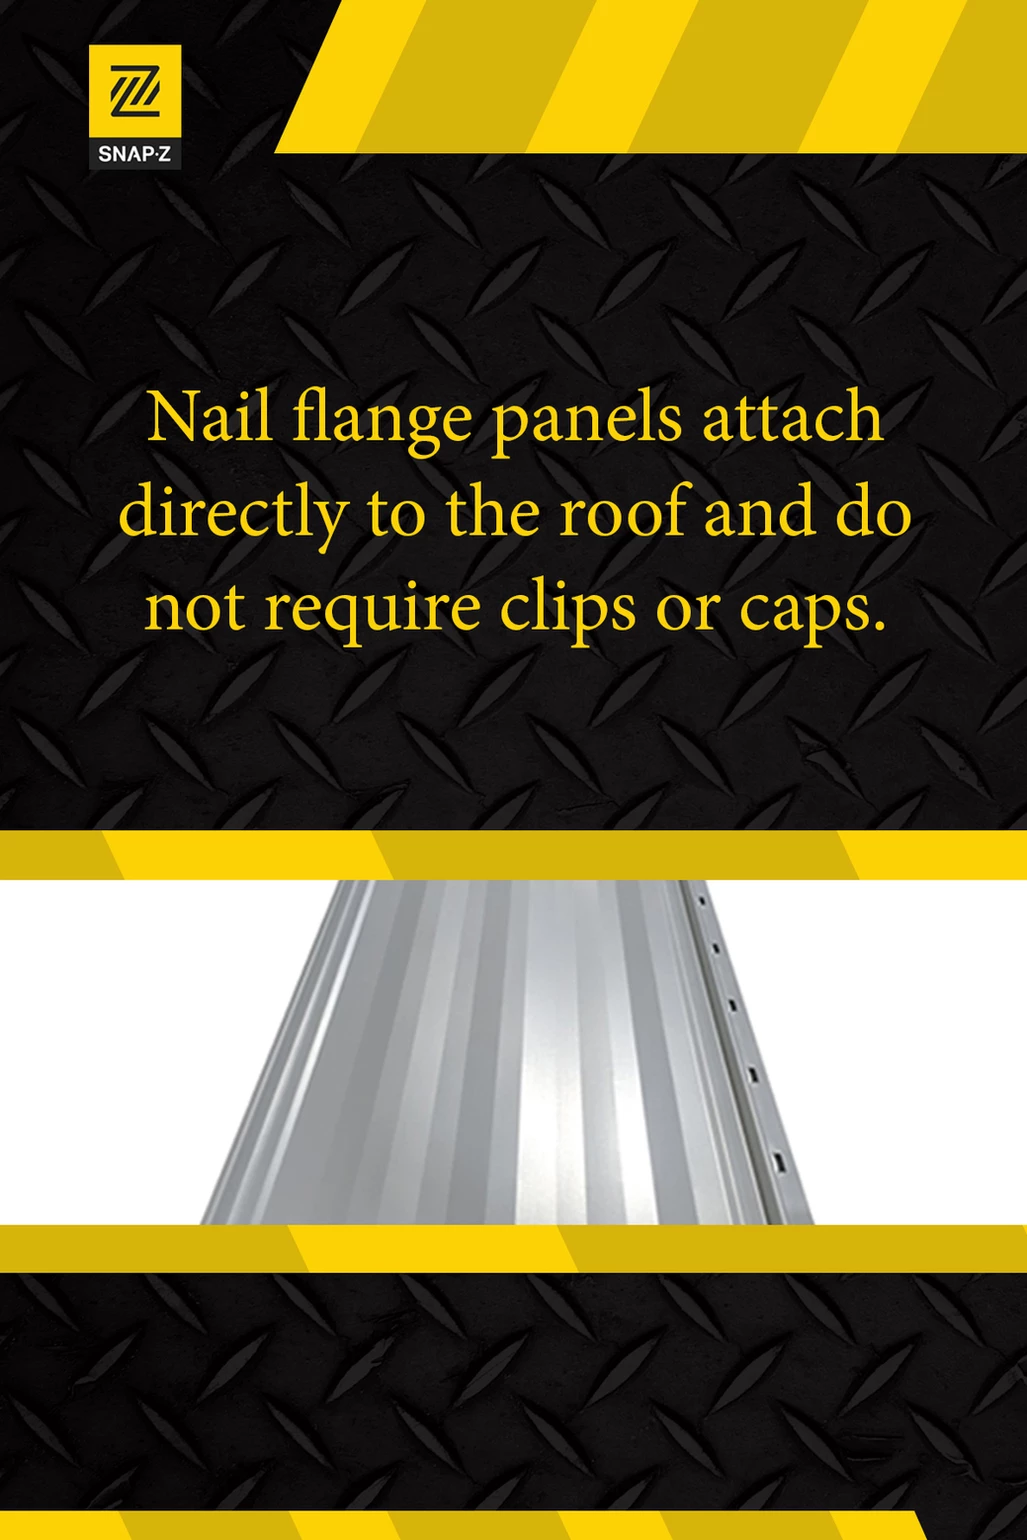 nail flange standing seam metal panels